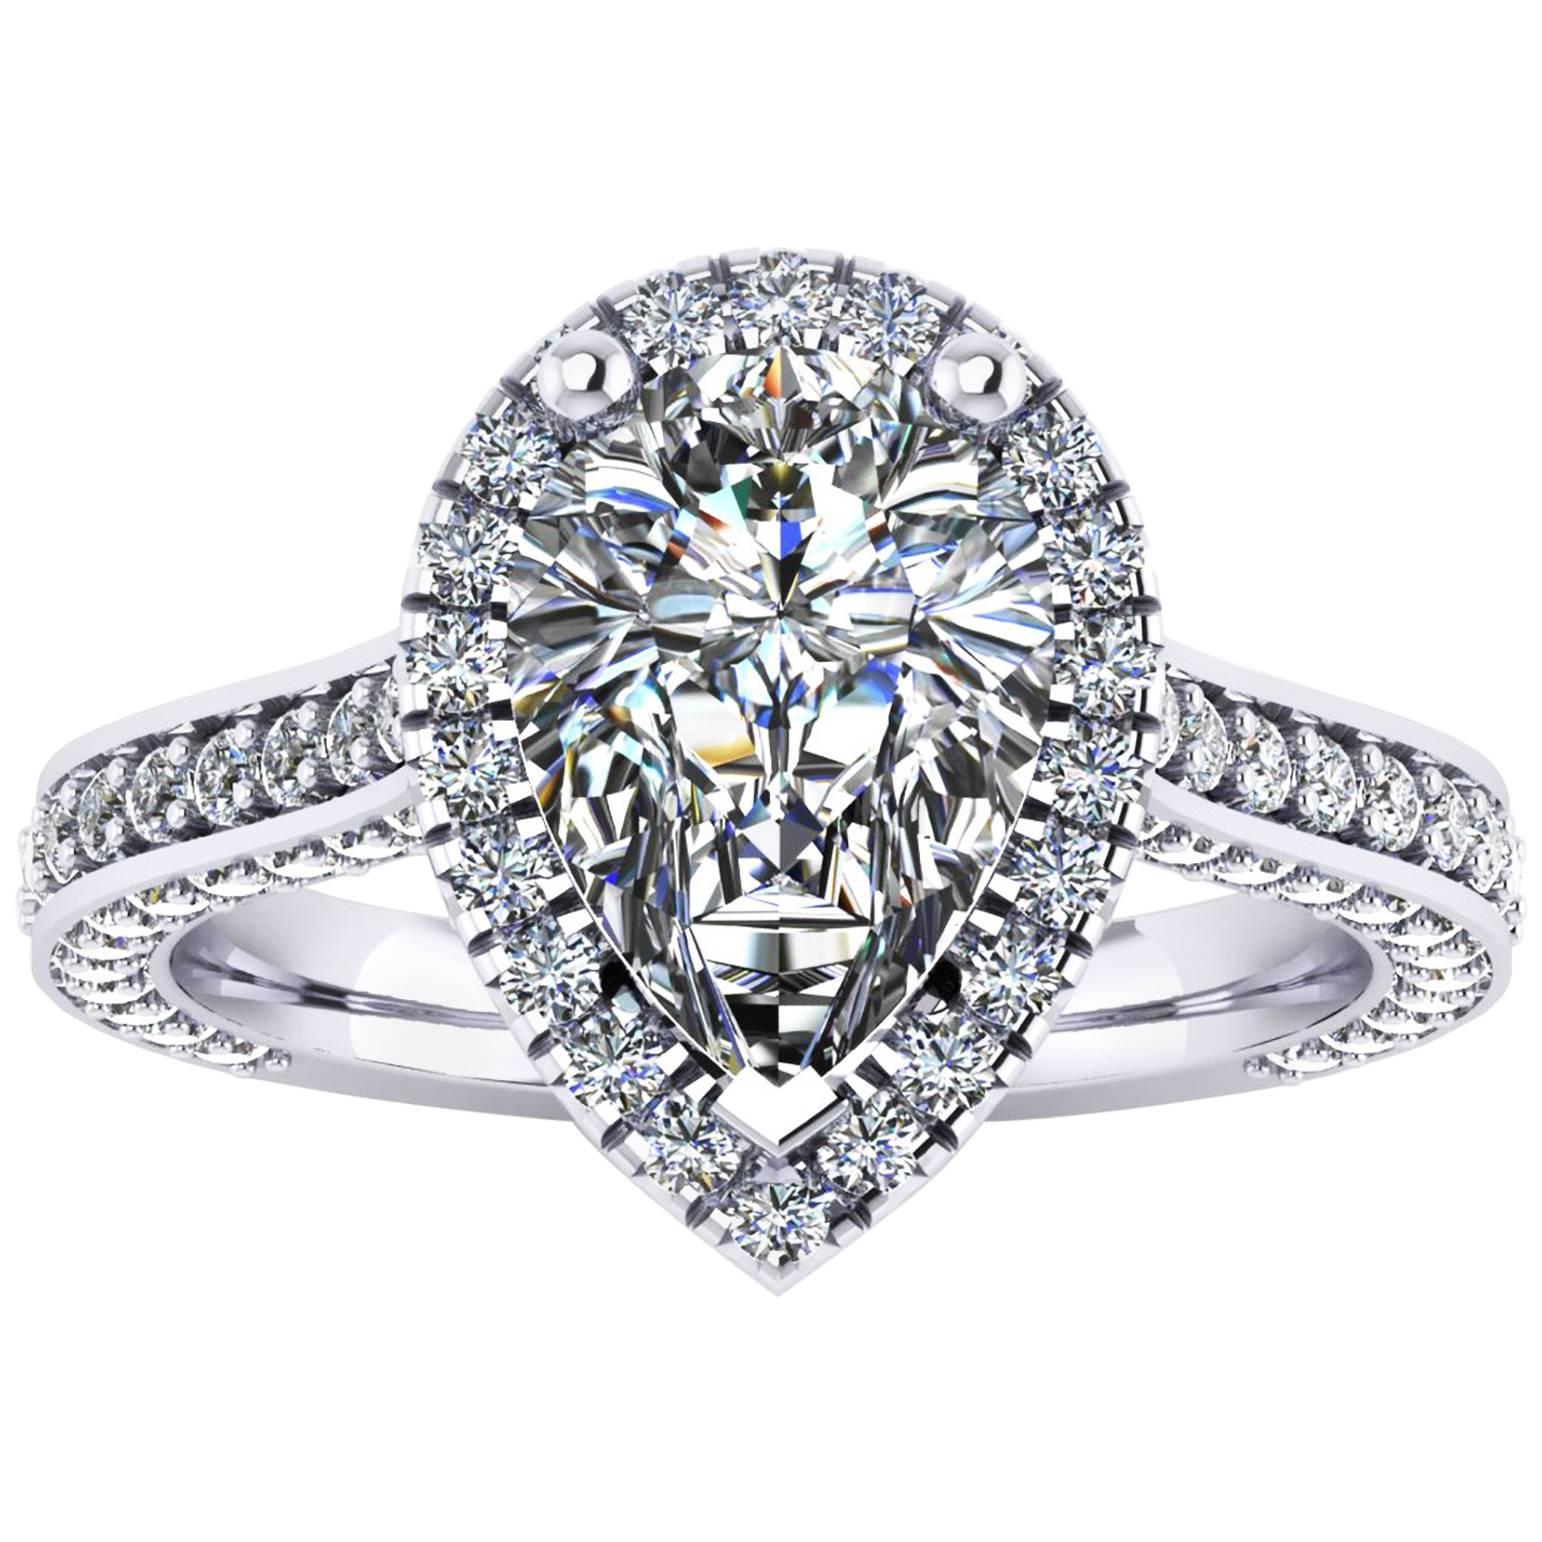 Ferrucci GIA Certified 1.90 Carat D Color Pear Shape Diamond Engagement Ring